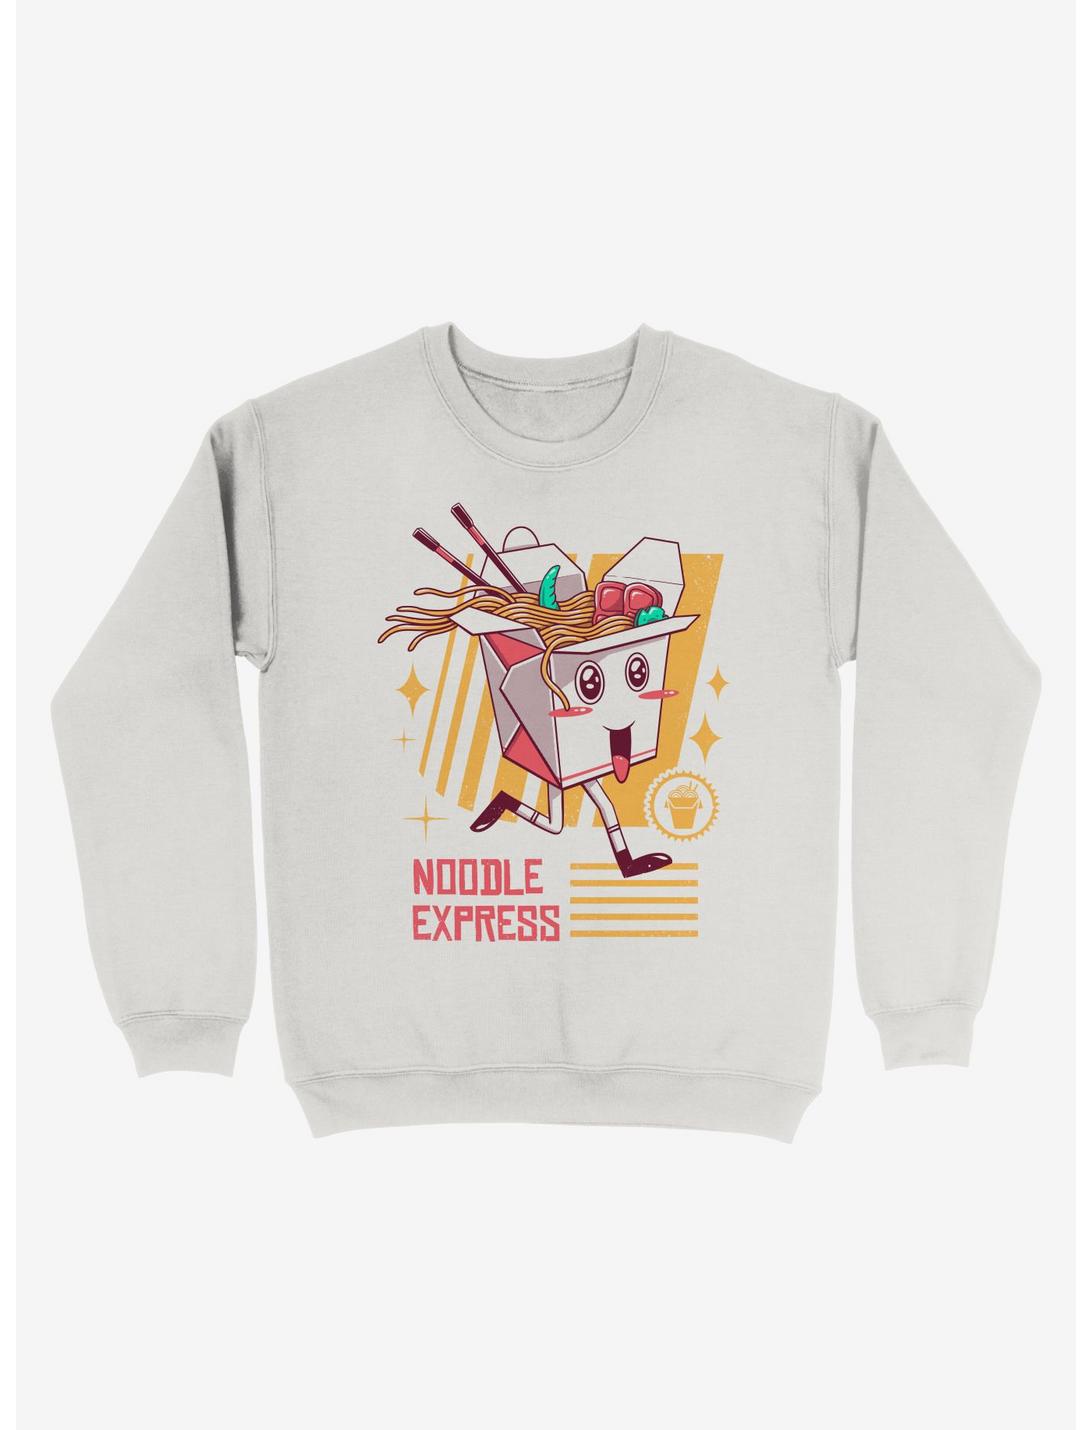 Noodle Express Sweatshirt, WHITE, hi-res